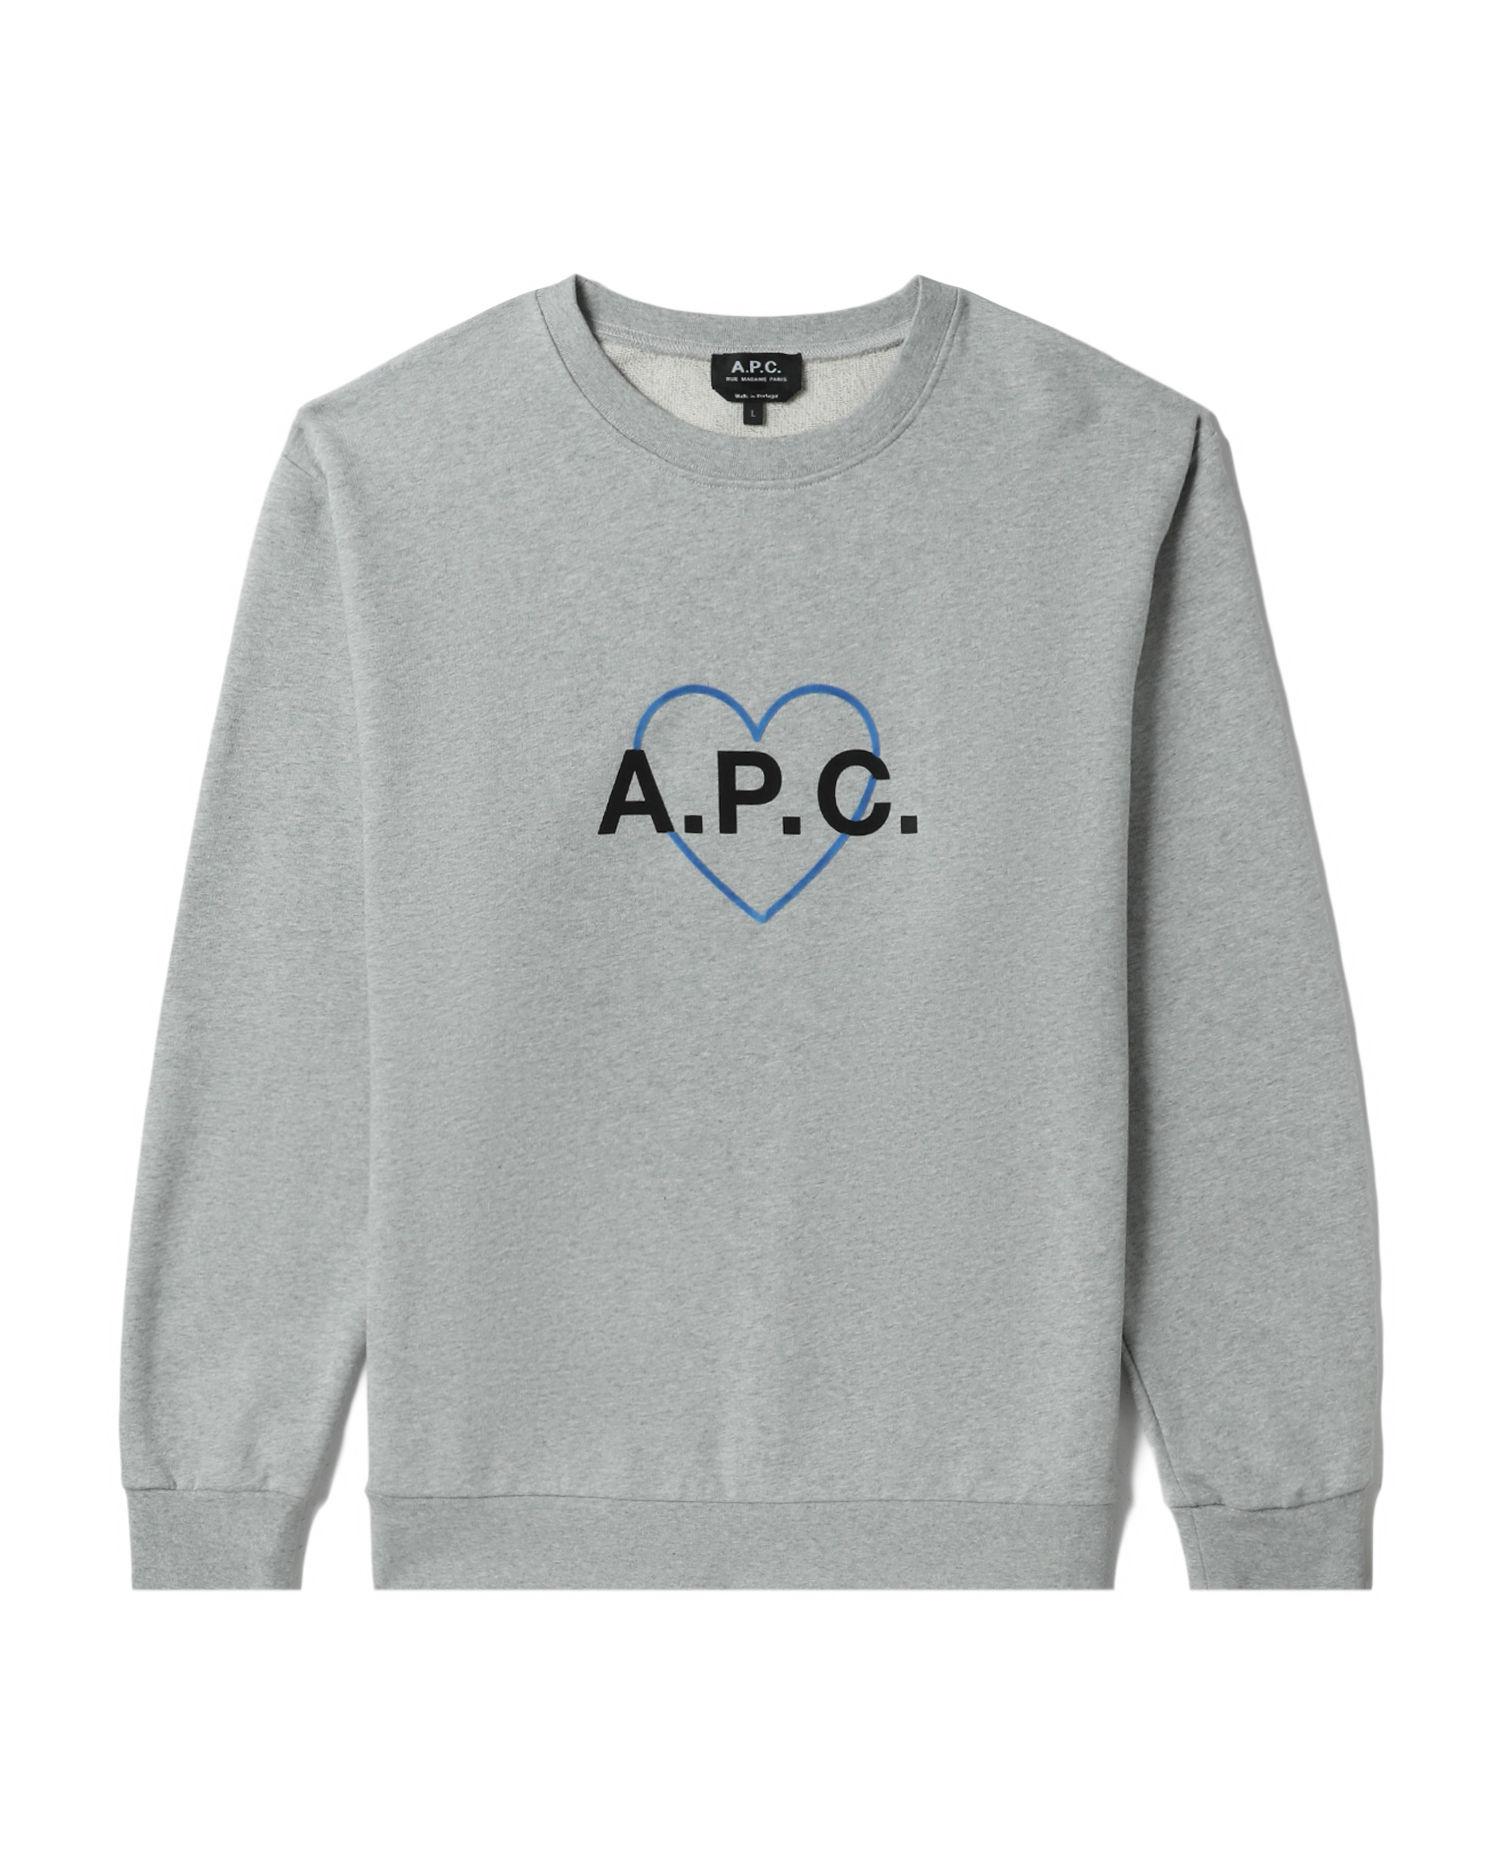 Logo sweatshirt by A.P.C.